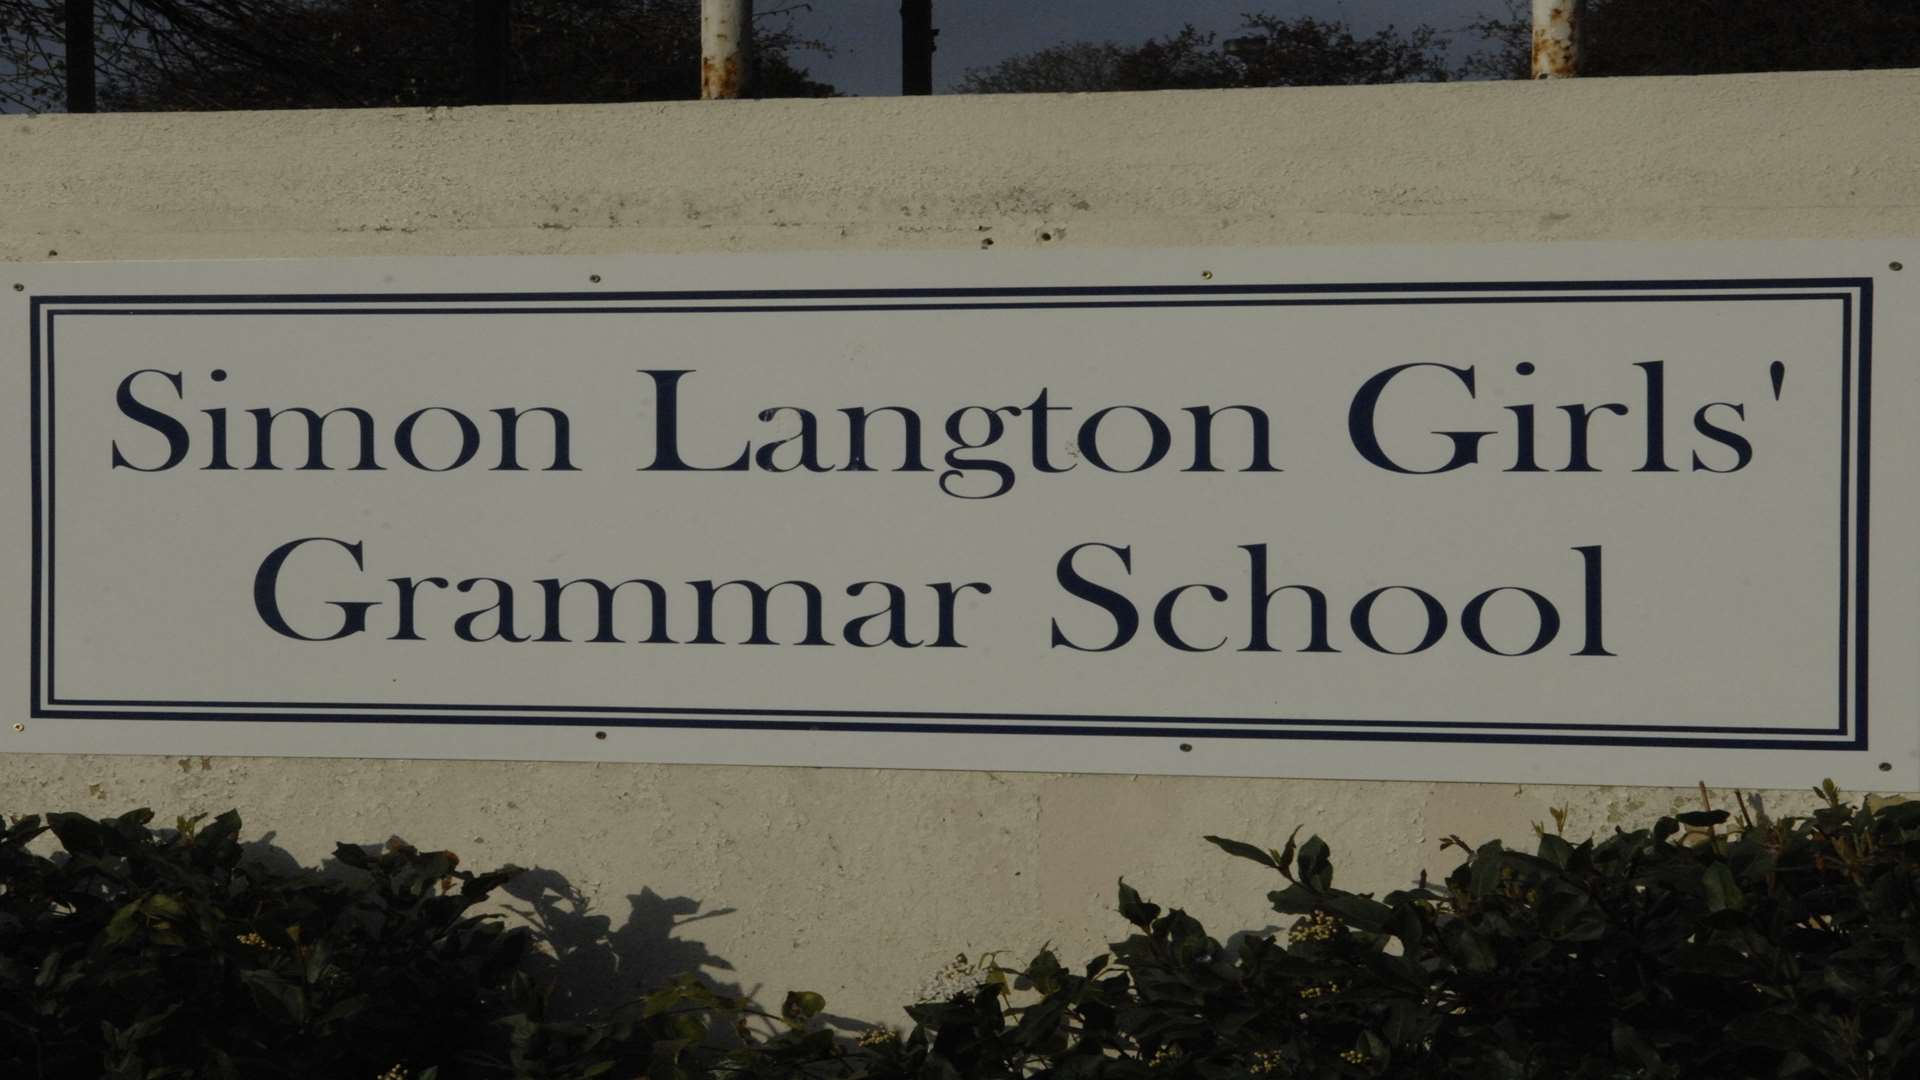 The Simon Langton Girls' Grammar School